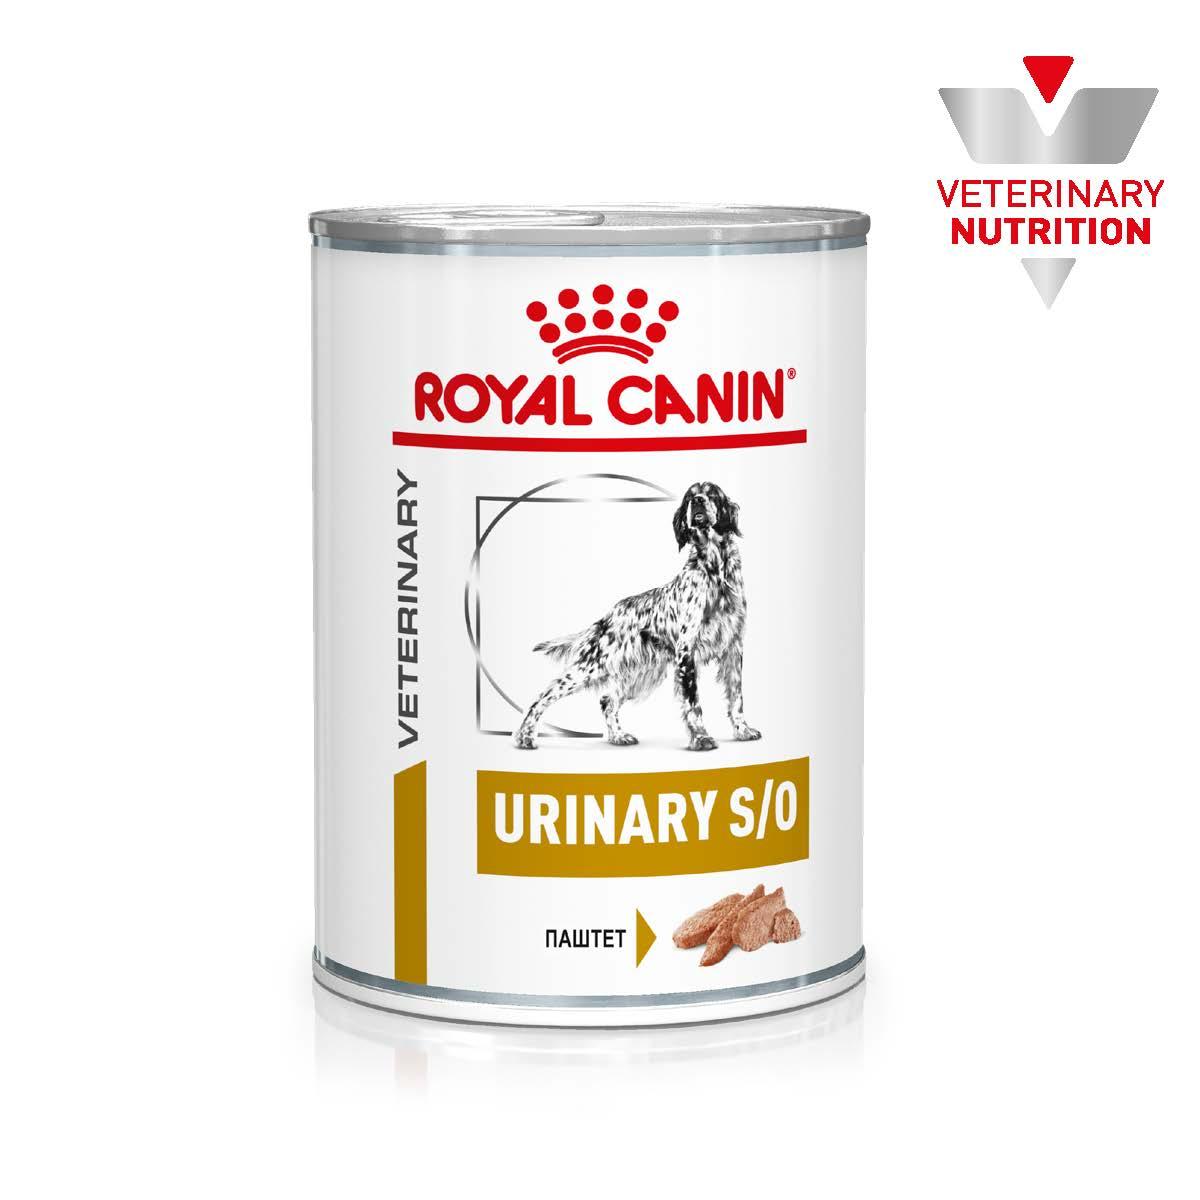 Вологий корм для дорослих собак ROYAL CANIN URINARY DOG Cans 0.41 кг, фото 1